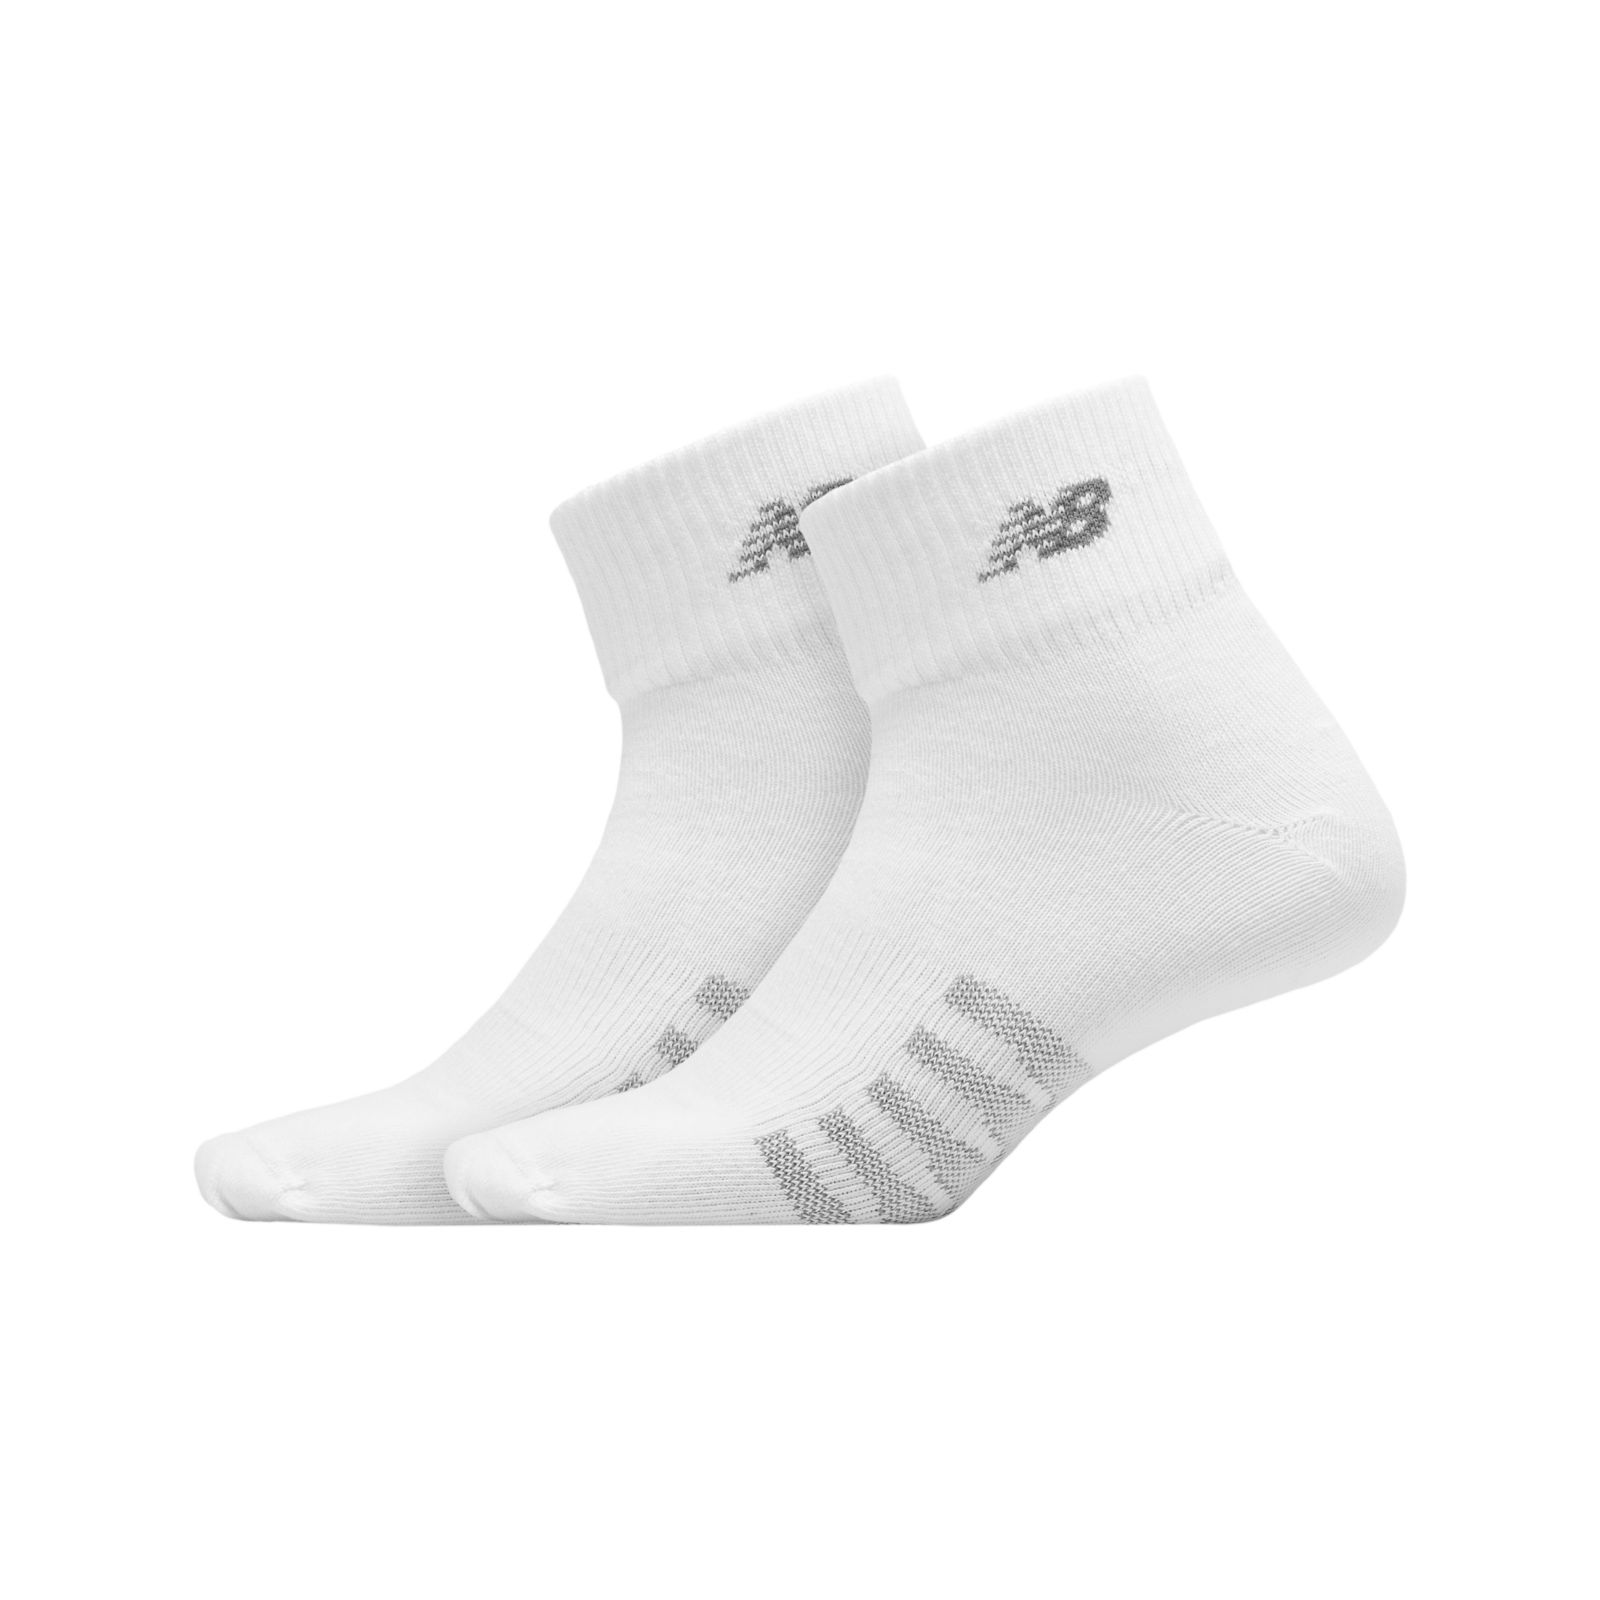 Coolmax Thin Quarter Socks 2 Pack - New Balance